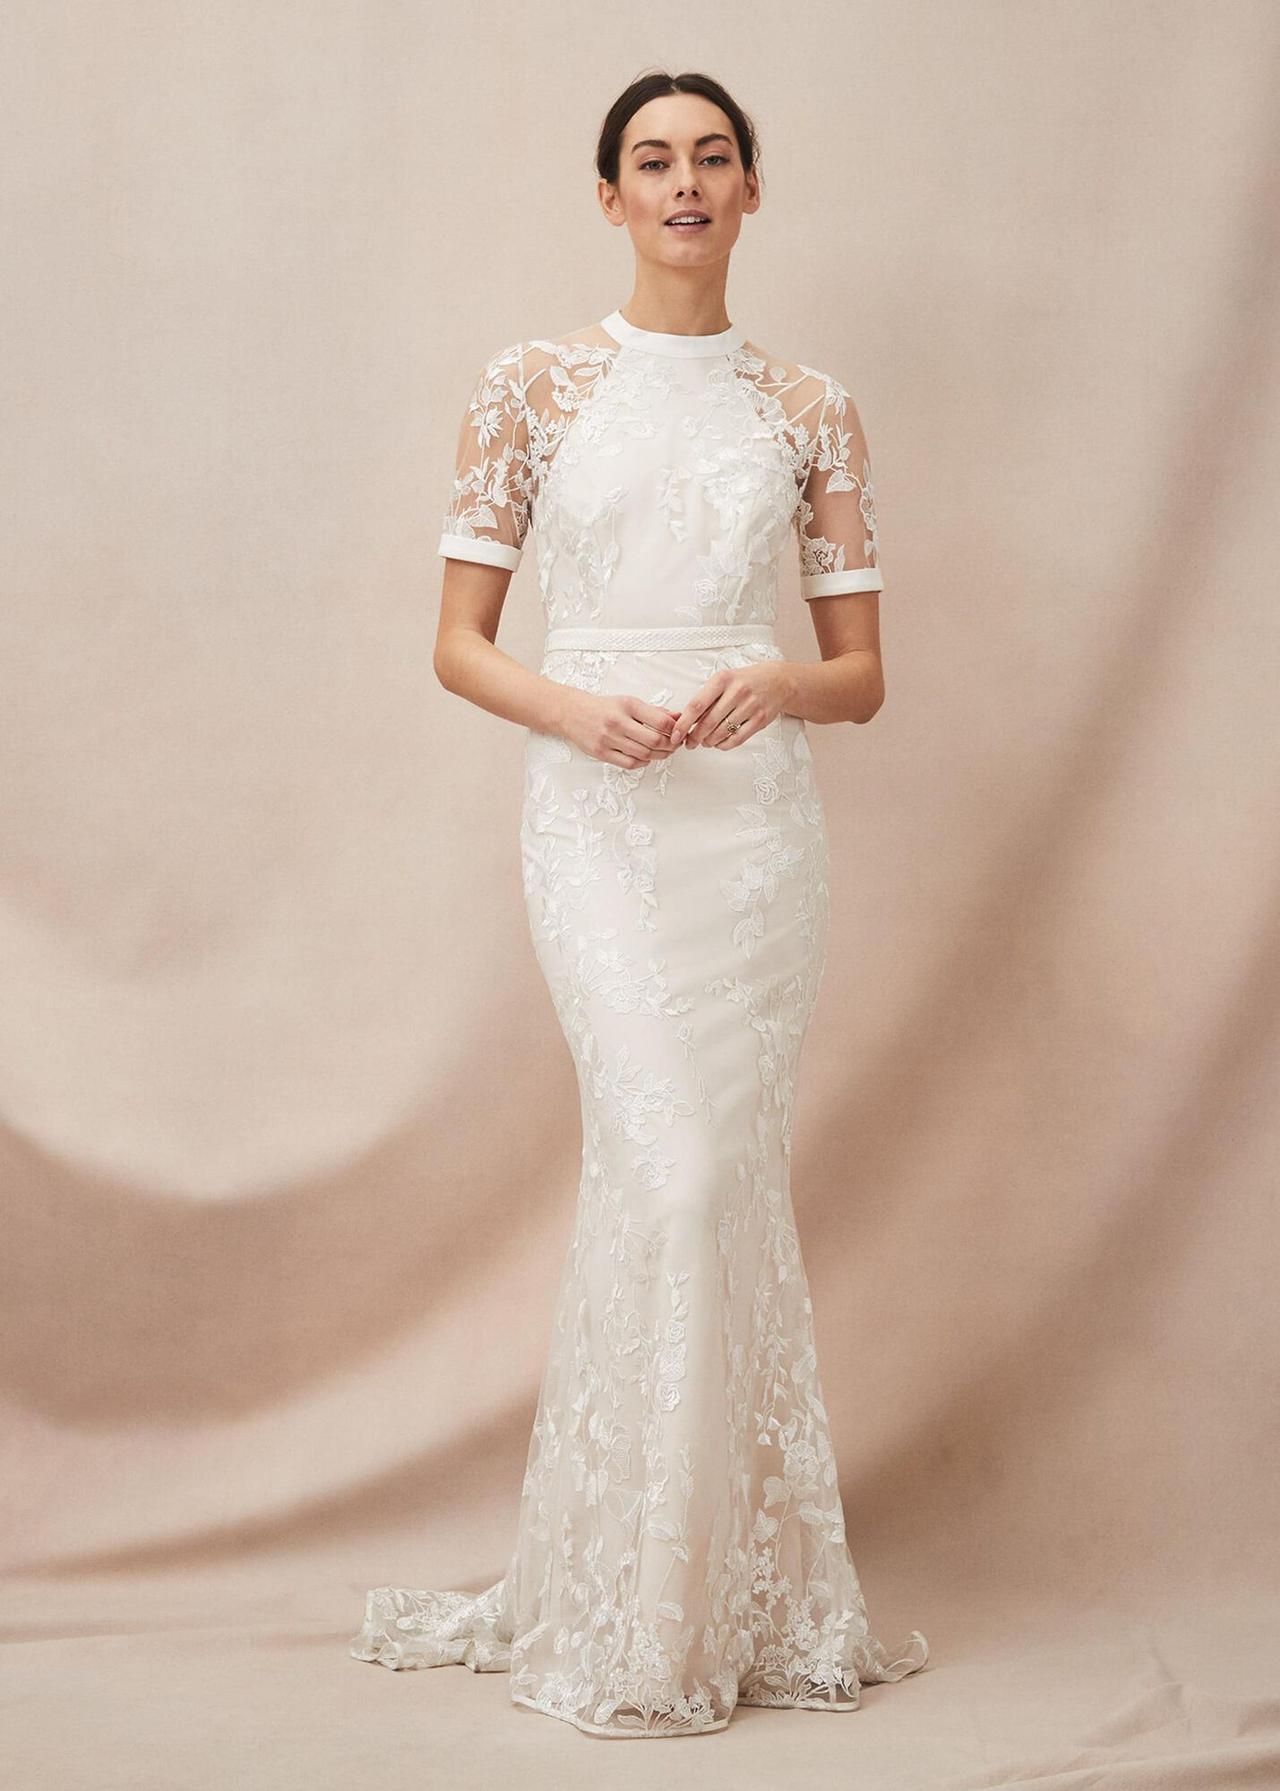 Model wearing a lace white wedding dress